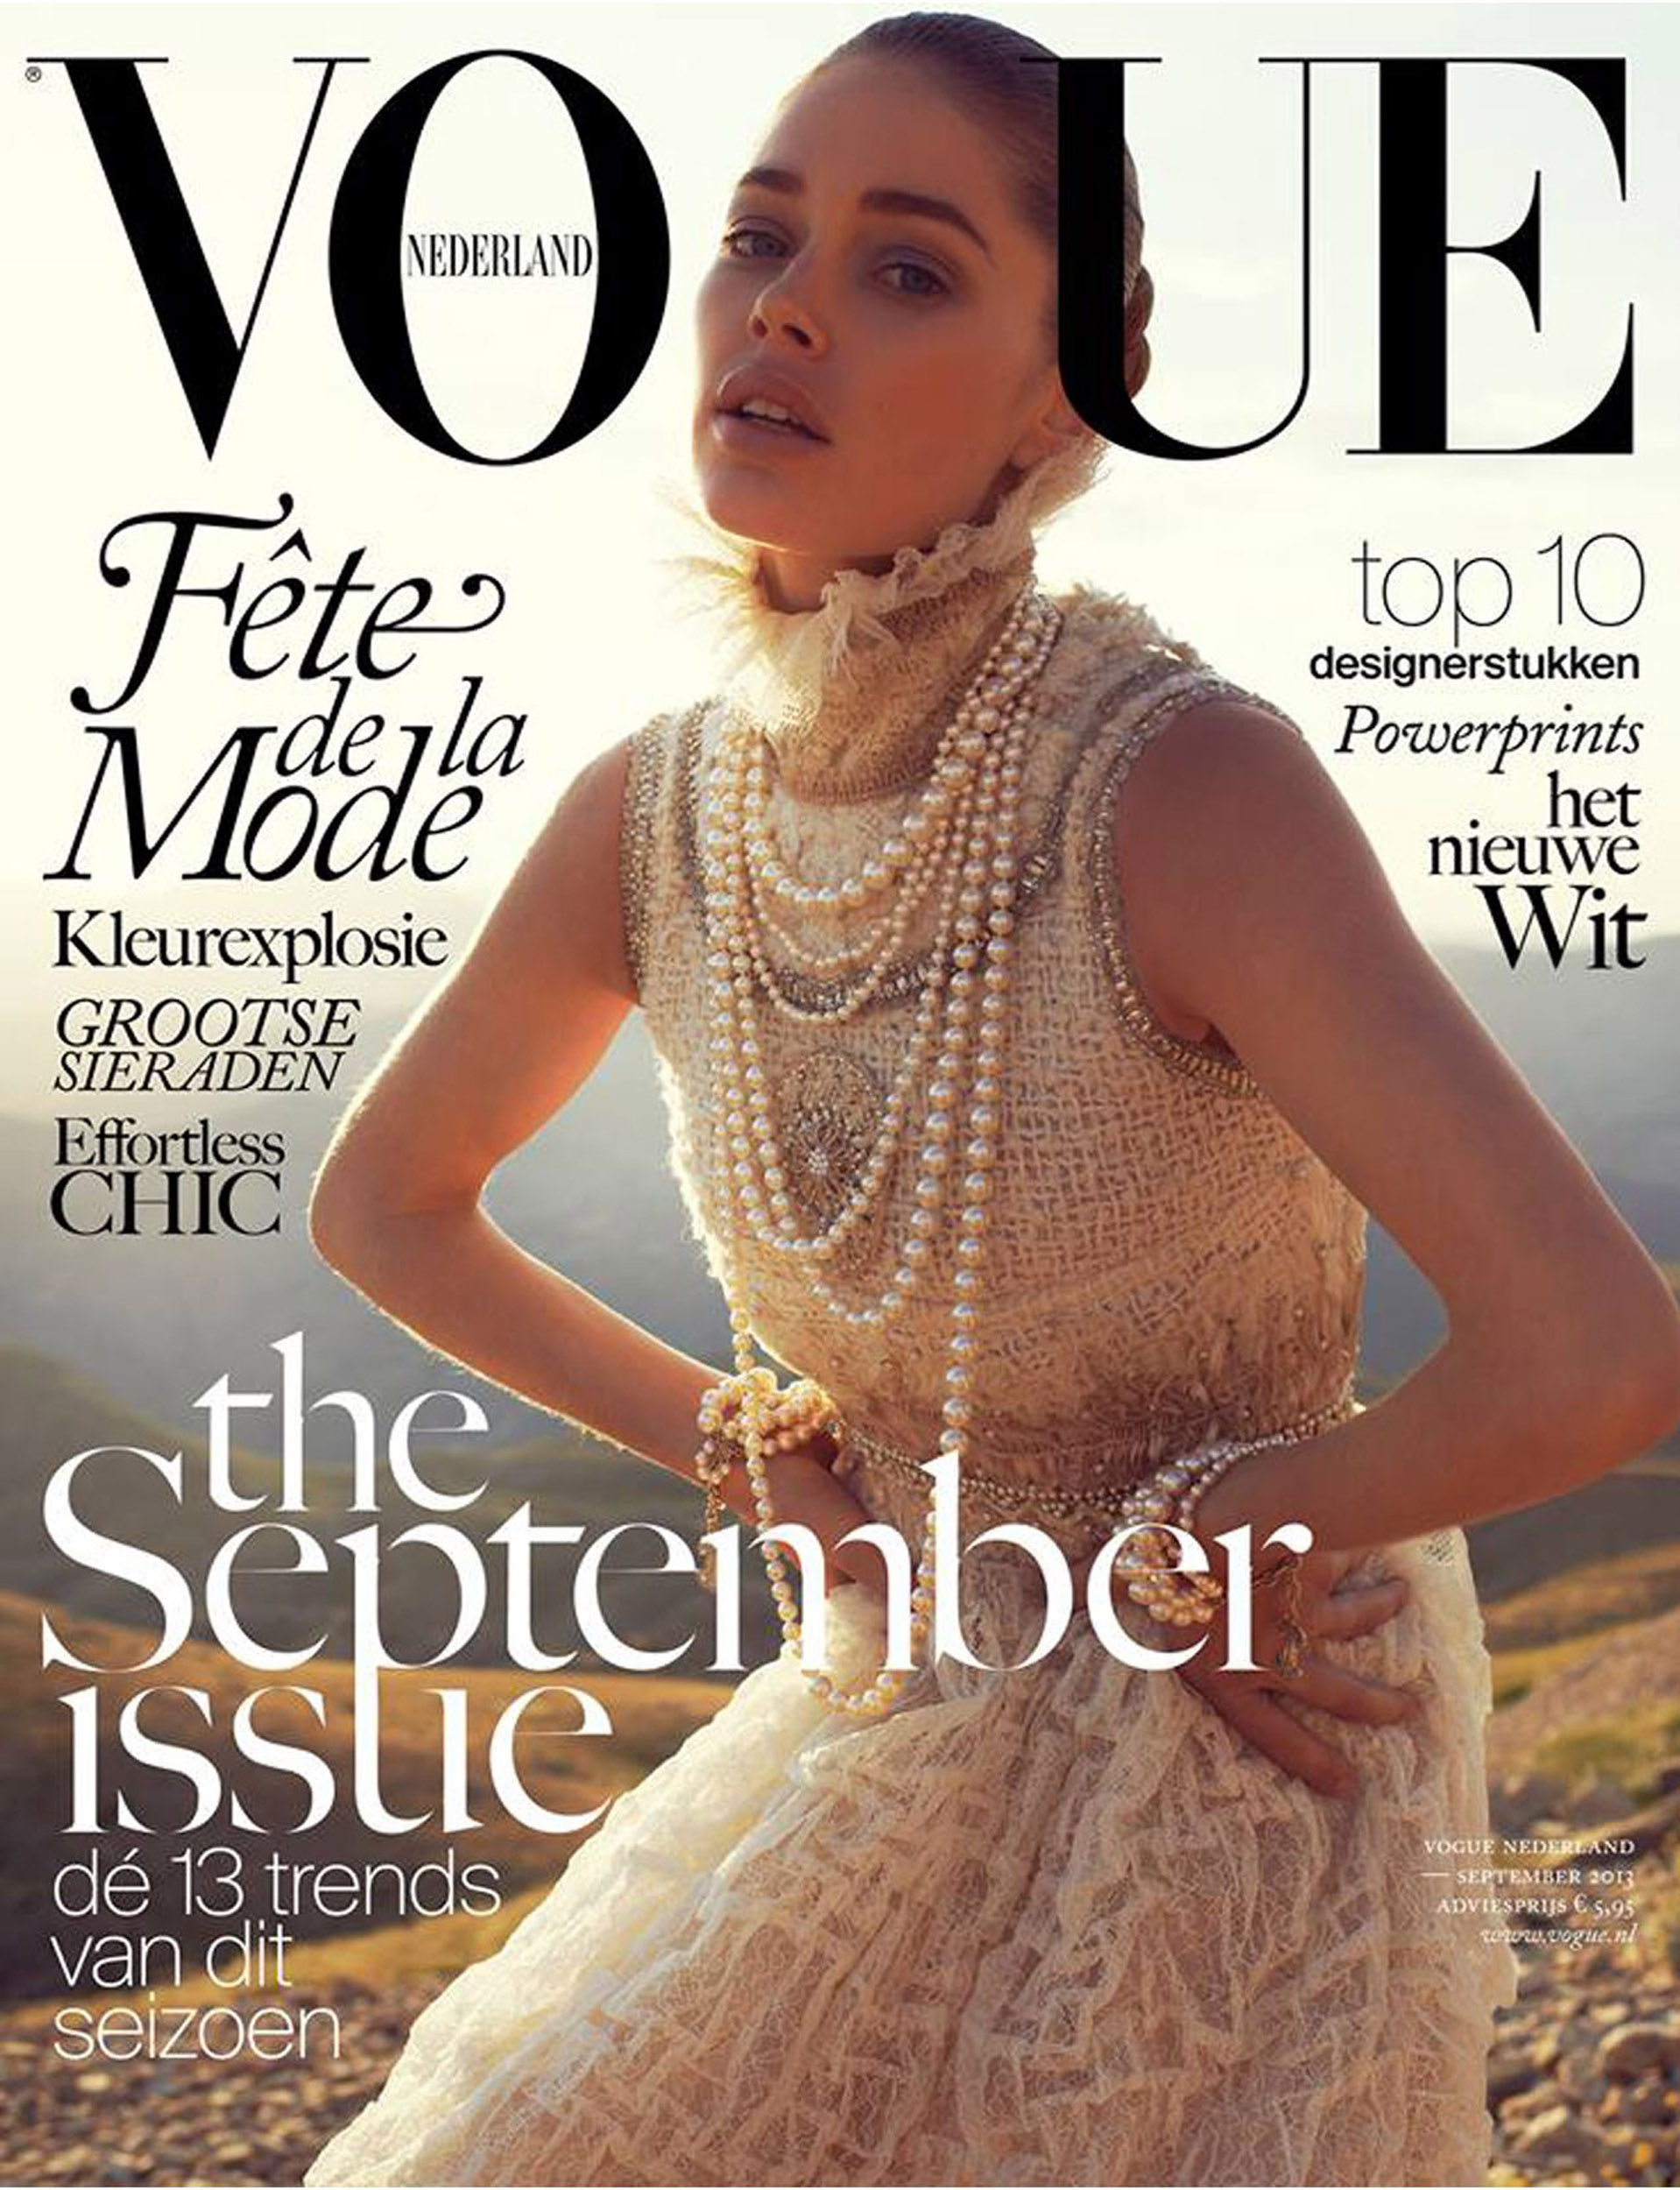 Doutzen Kroes i klädd i pärlor på omslaget av "Vouge". 